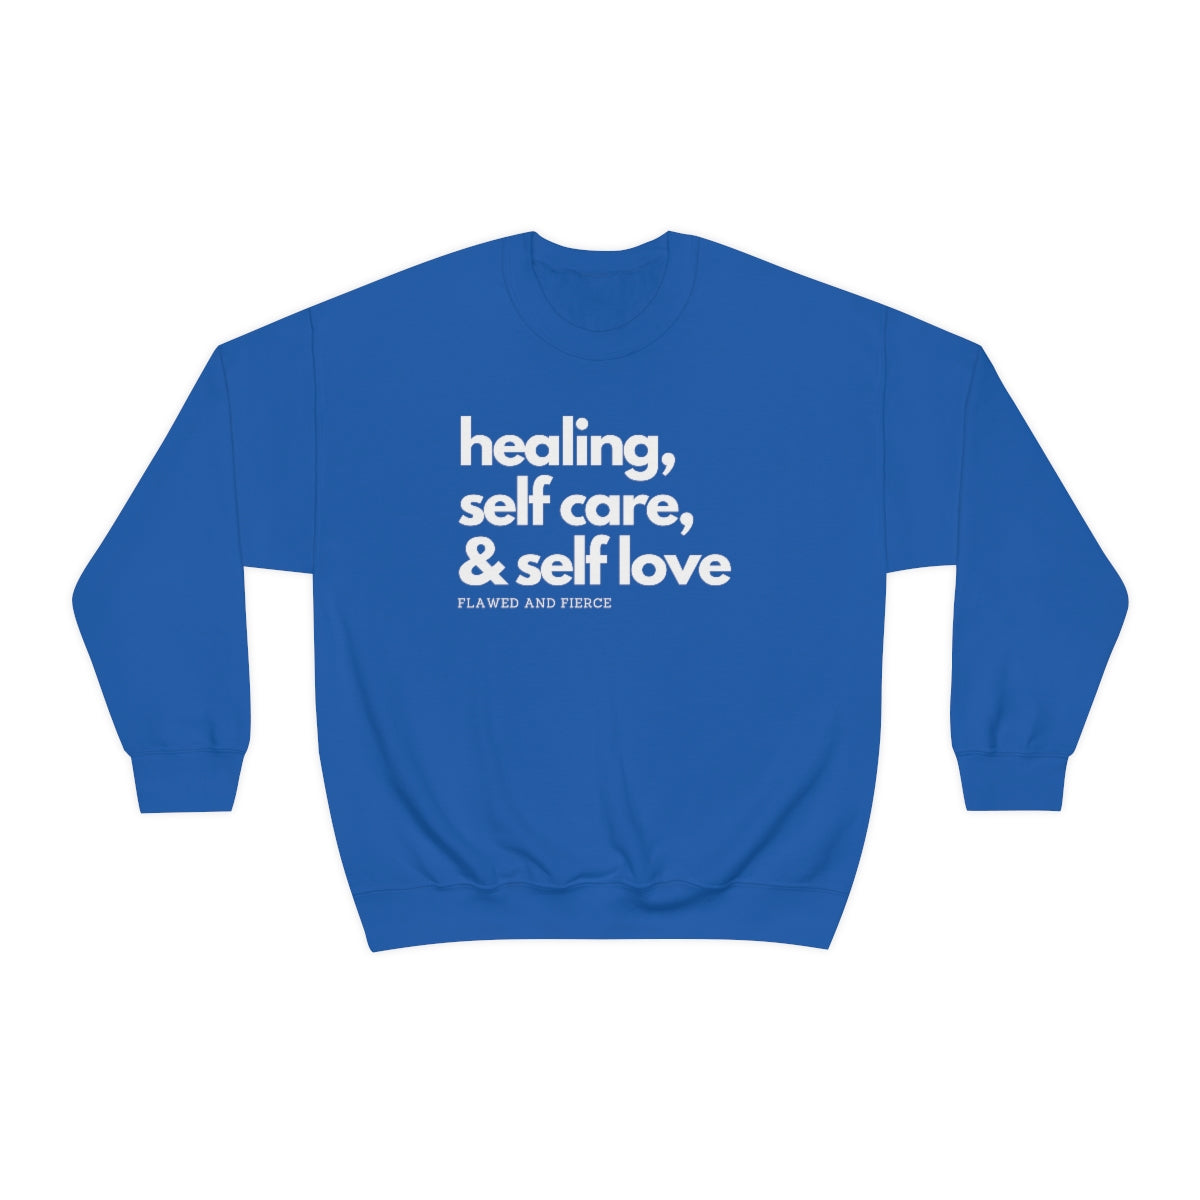 Healing, self care, and self love sweatshirt